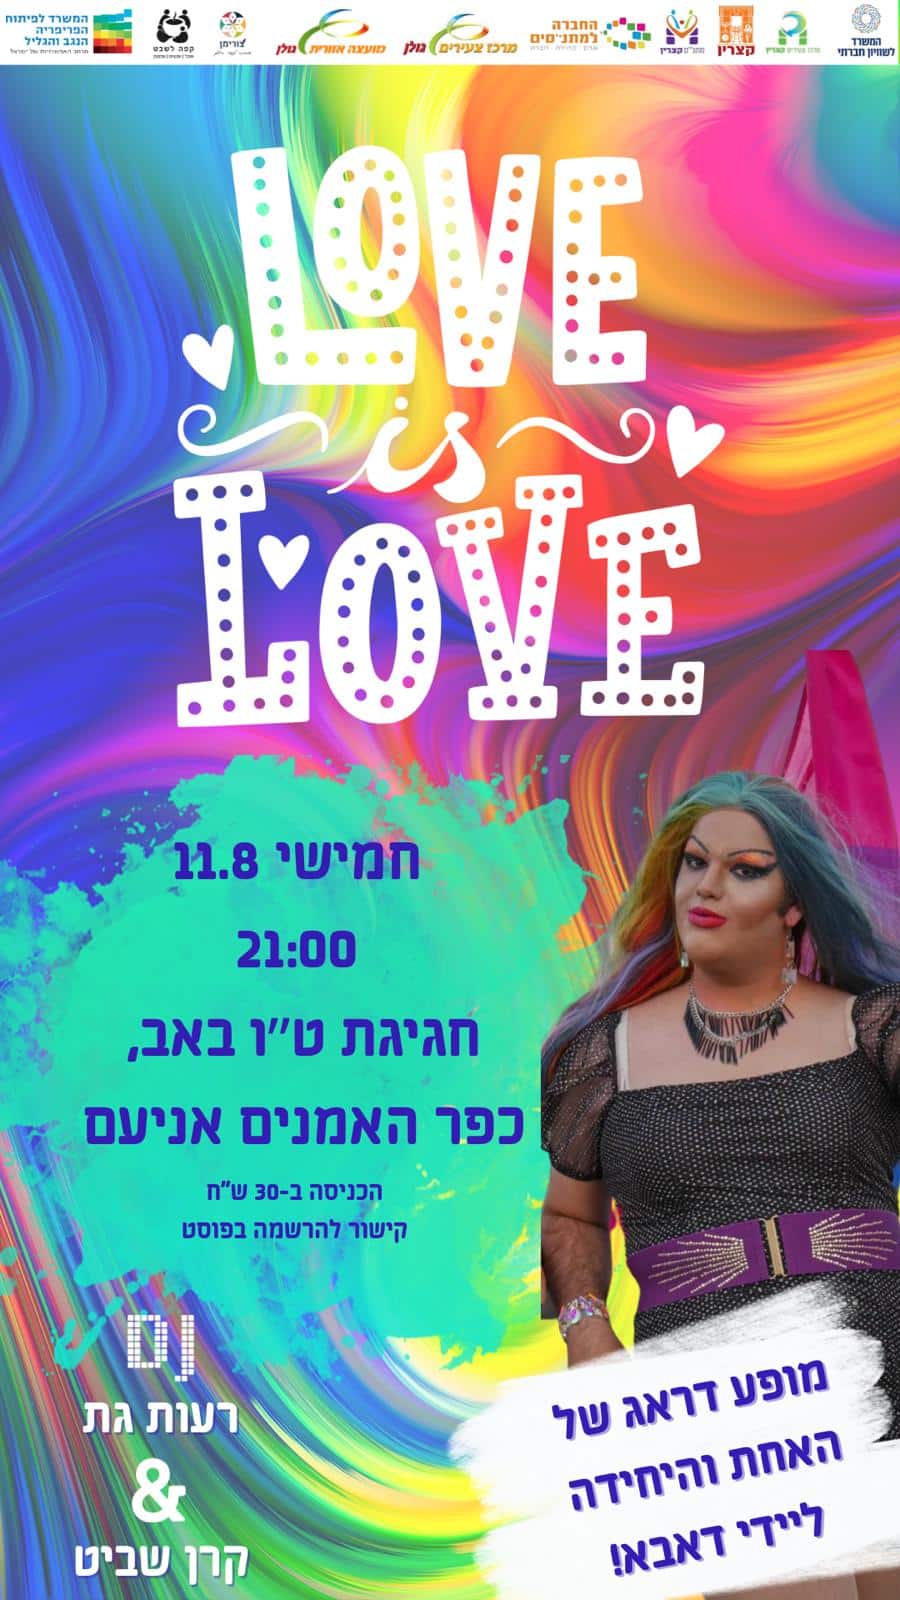 love is love - חמישי 11.8 שעה 21:00